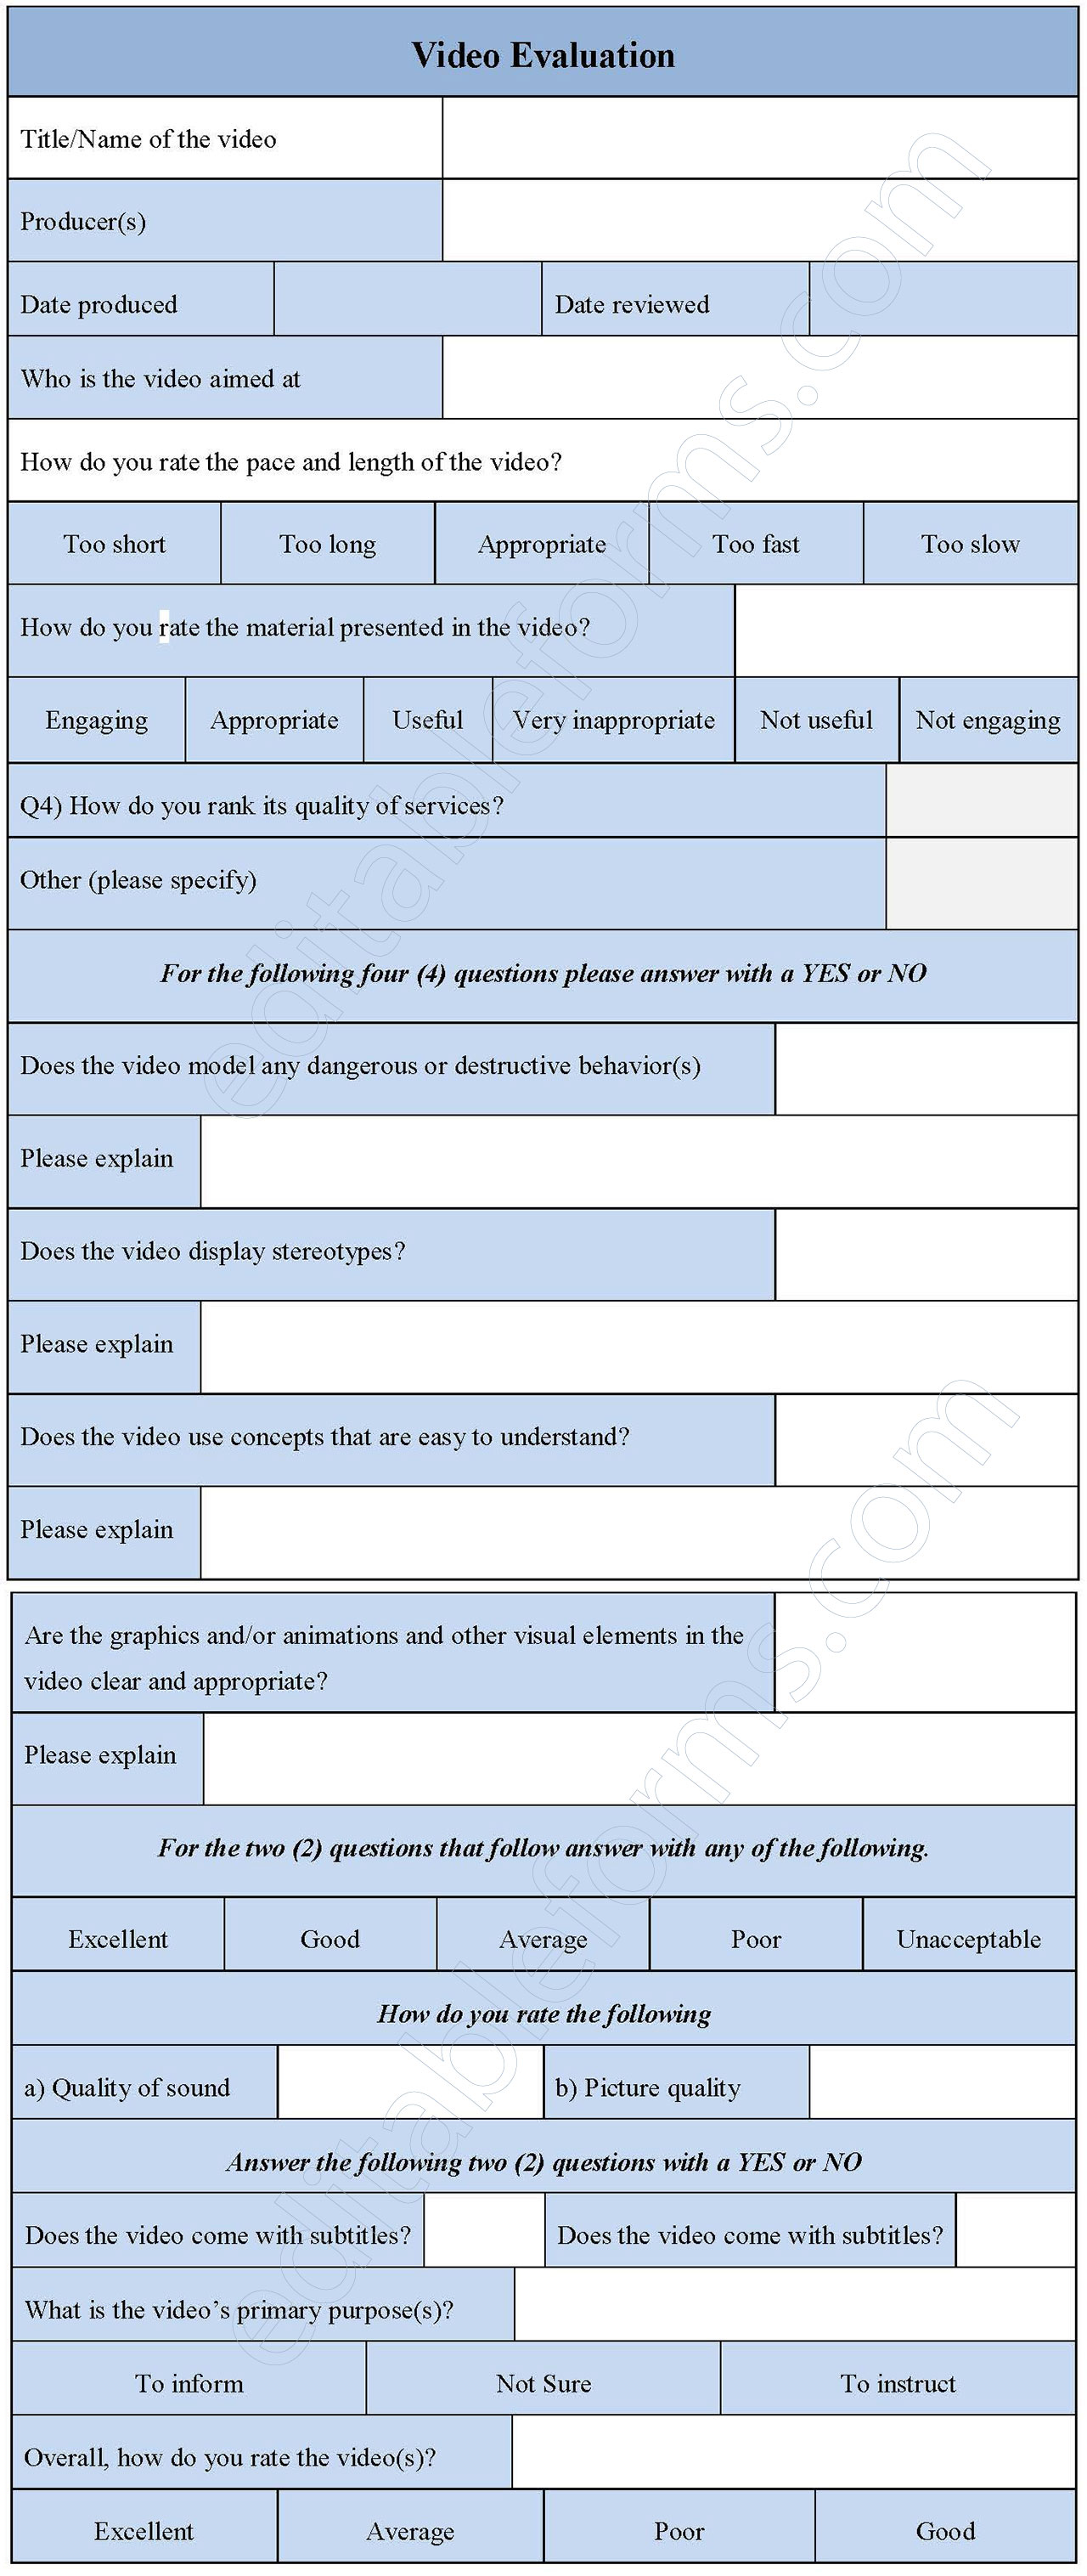 Video Evaluation Form